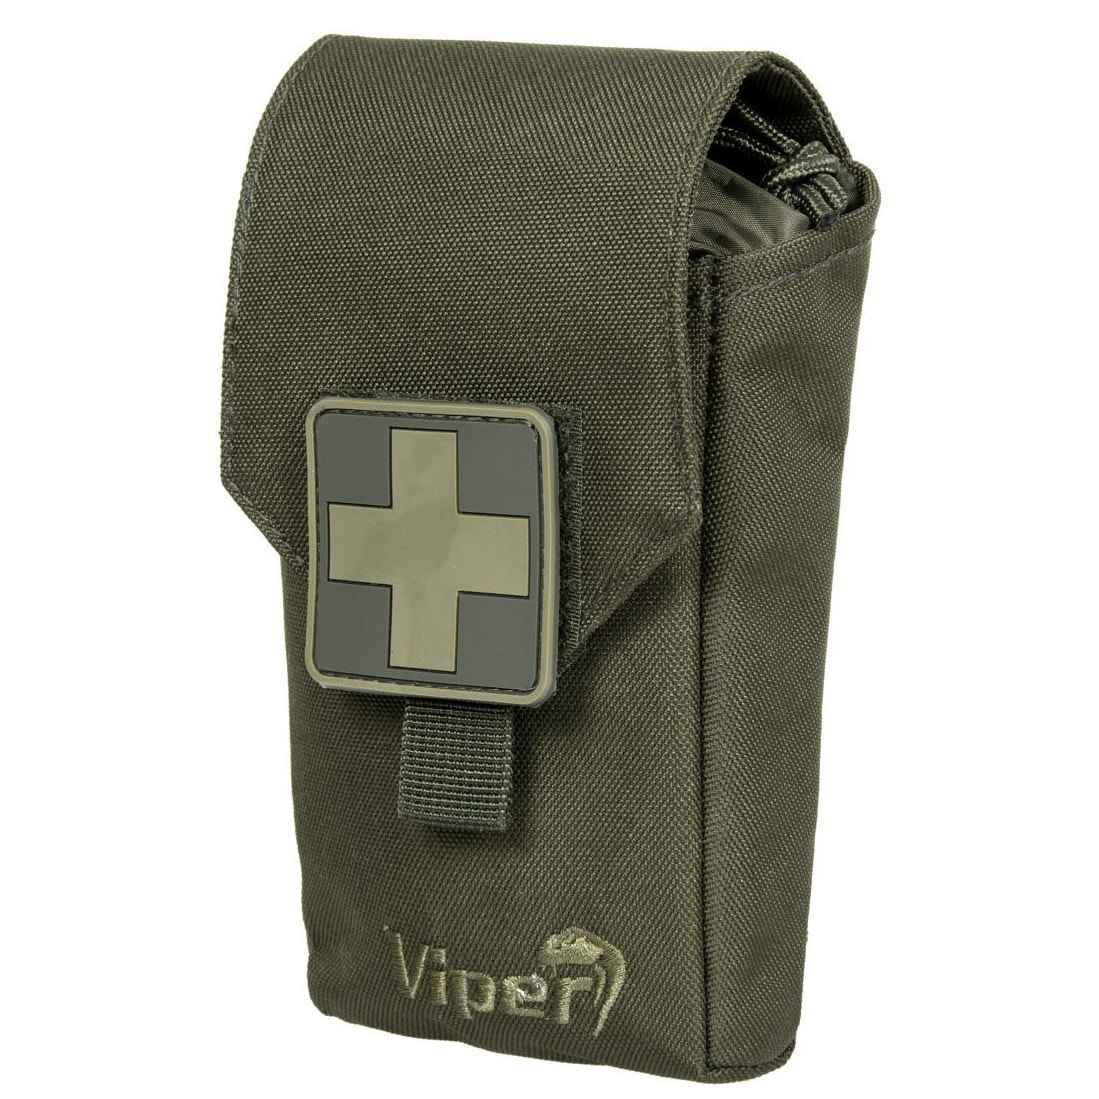 Apteczka Viper Tactical Aid Kit - Oliwkowa 